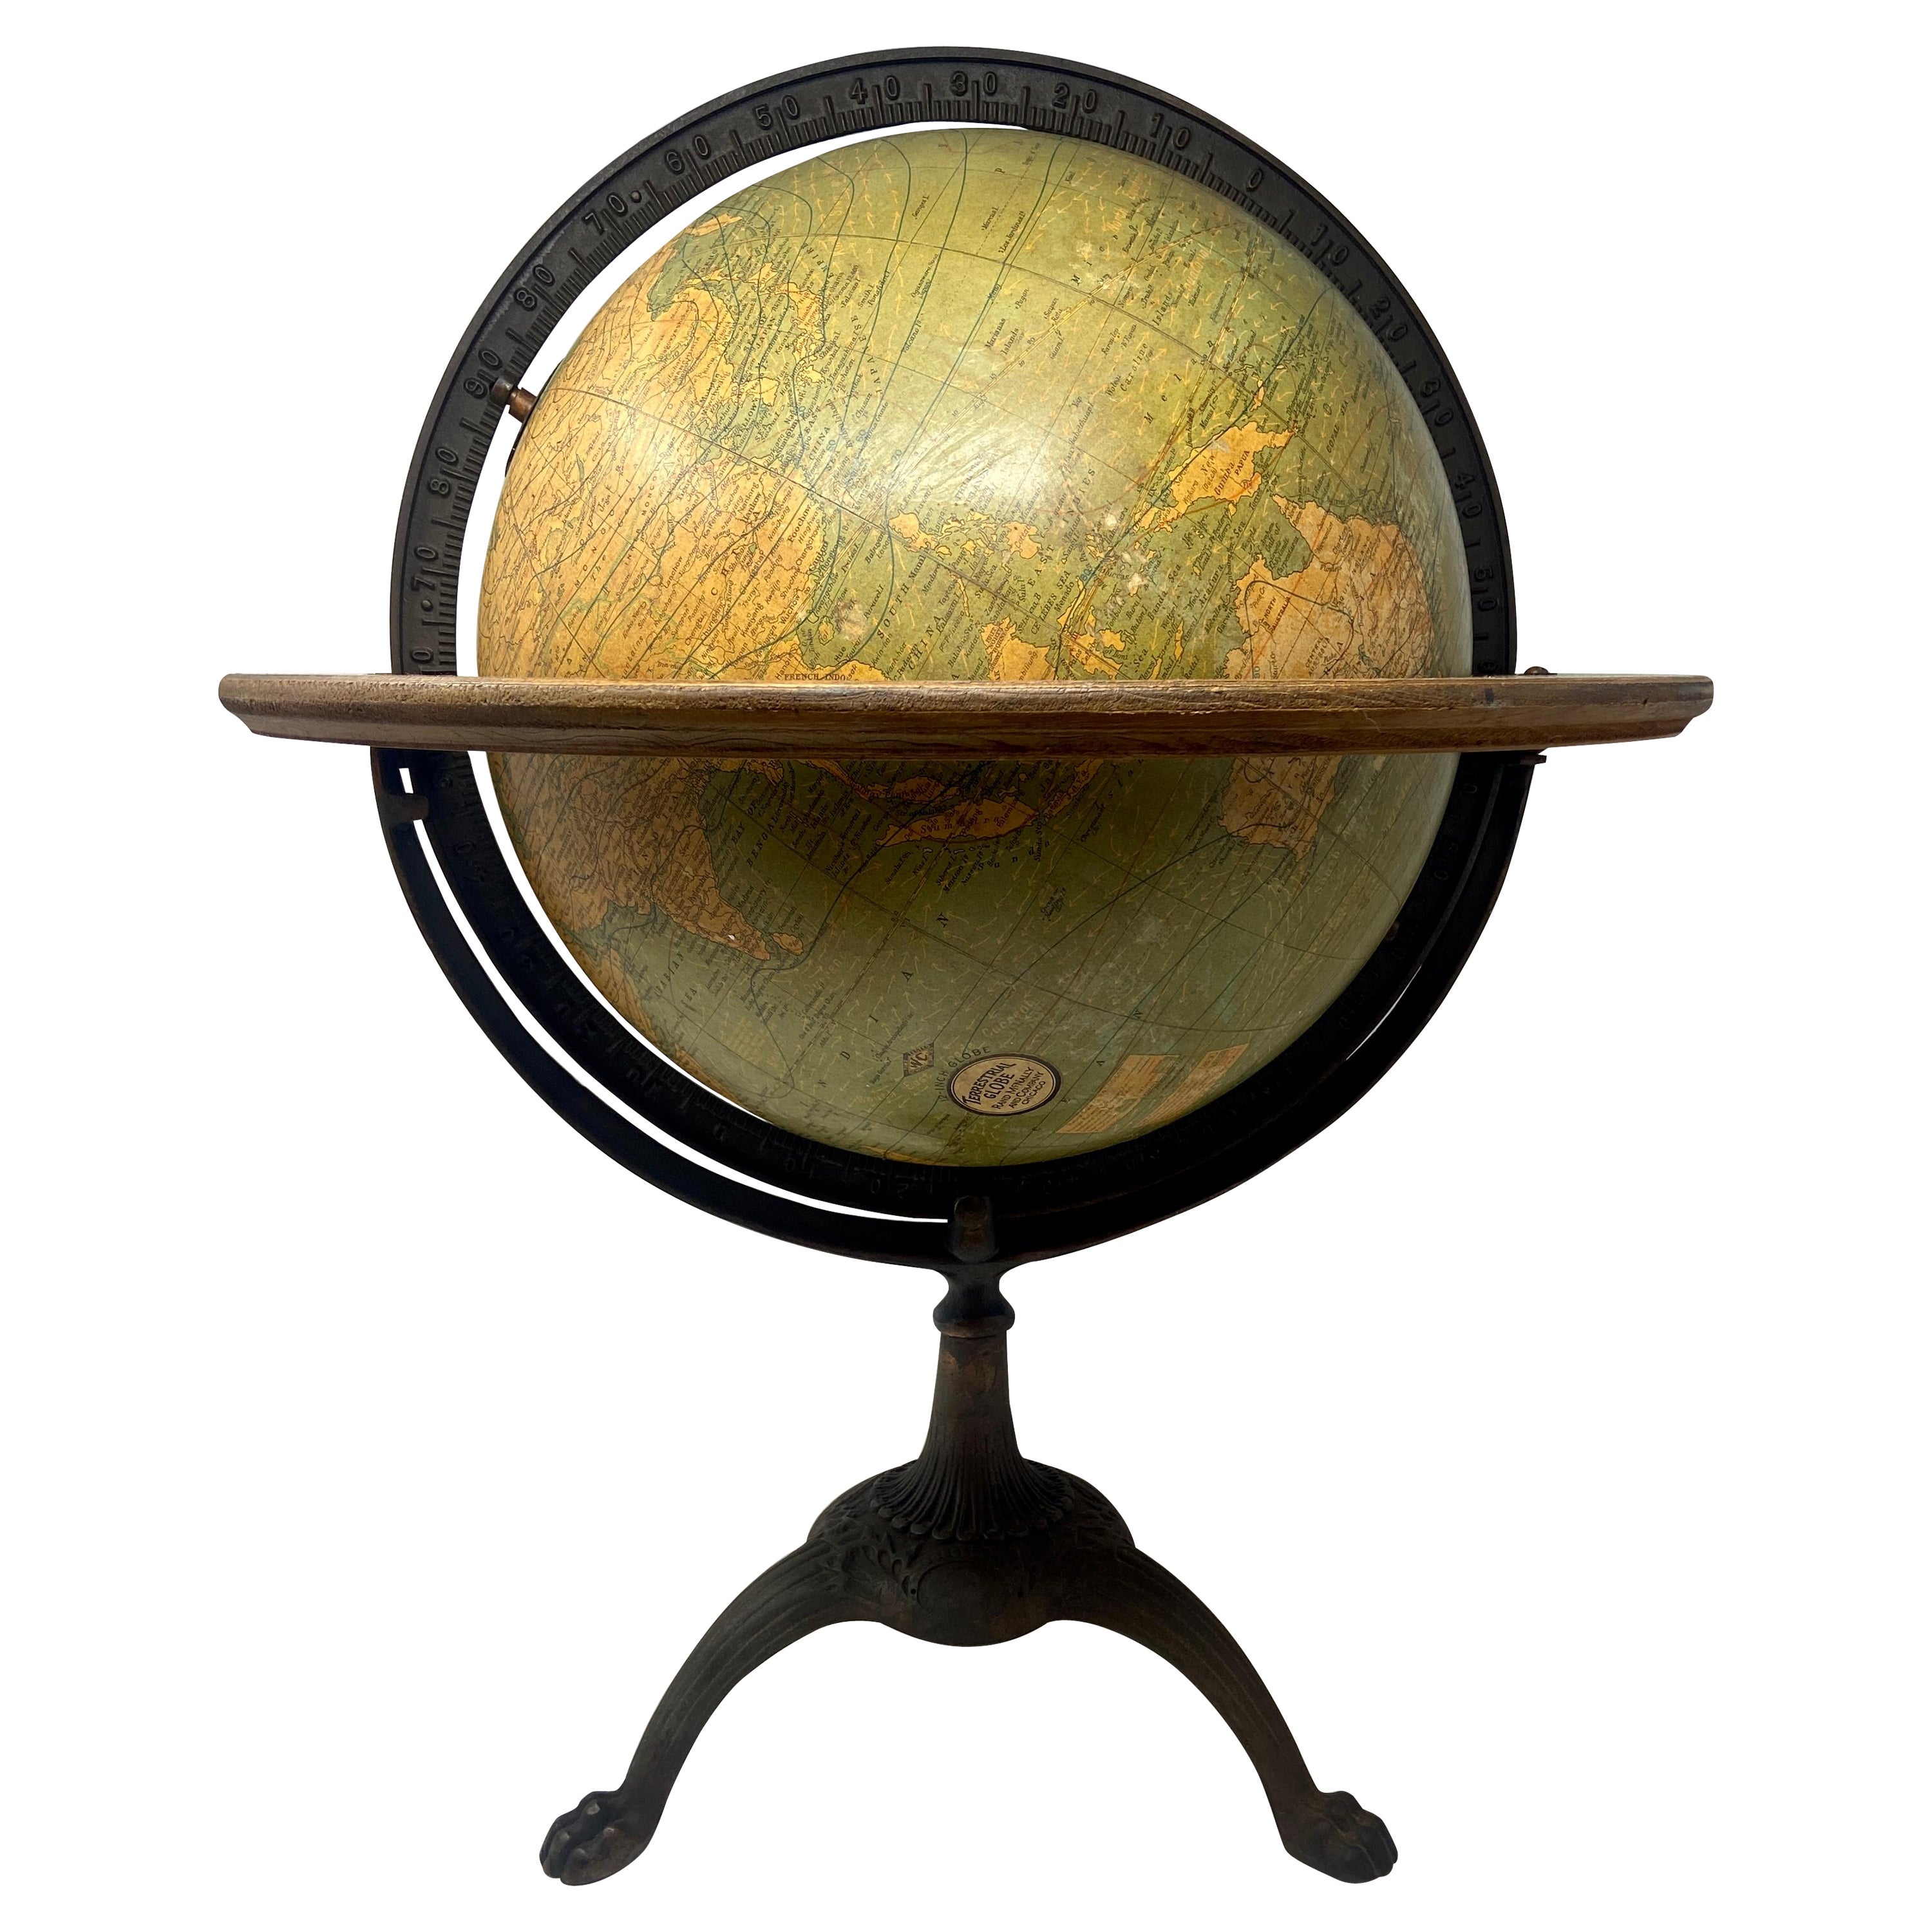 Anciennement américaine, Red Menally Co. Globe de table de Chicago sur Stand, Circa 1900